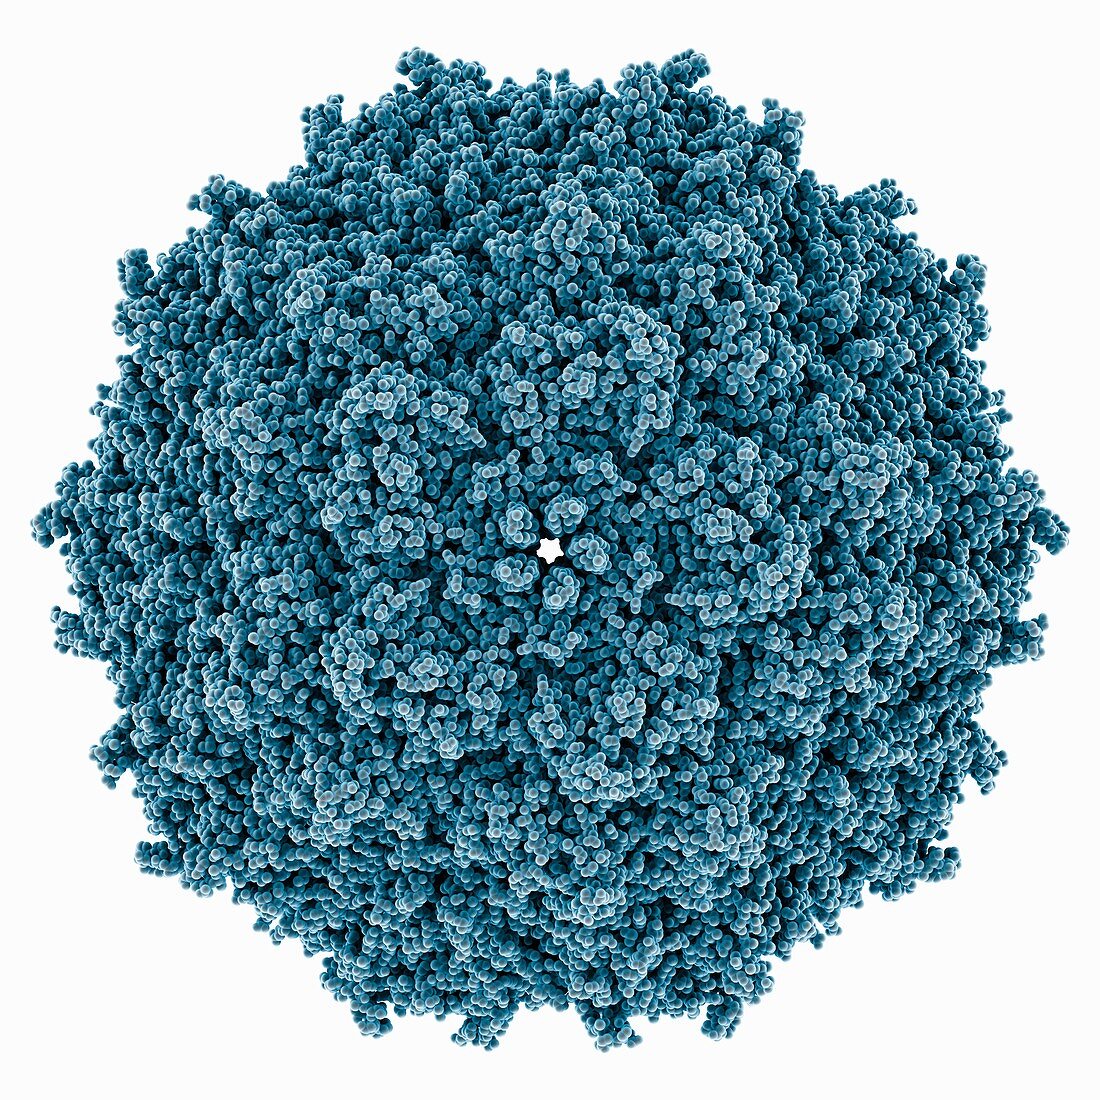 Human bocavirus-4 capsid, molecular model